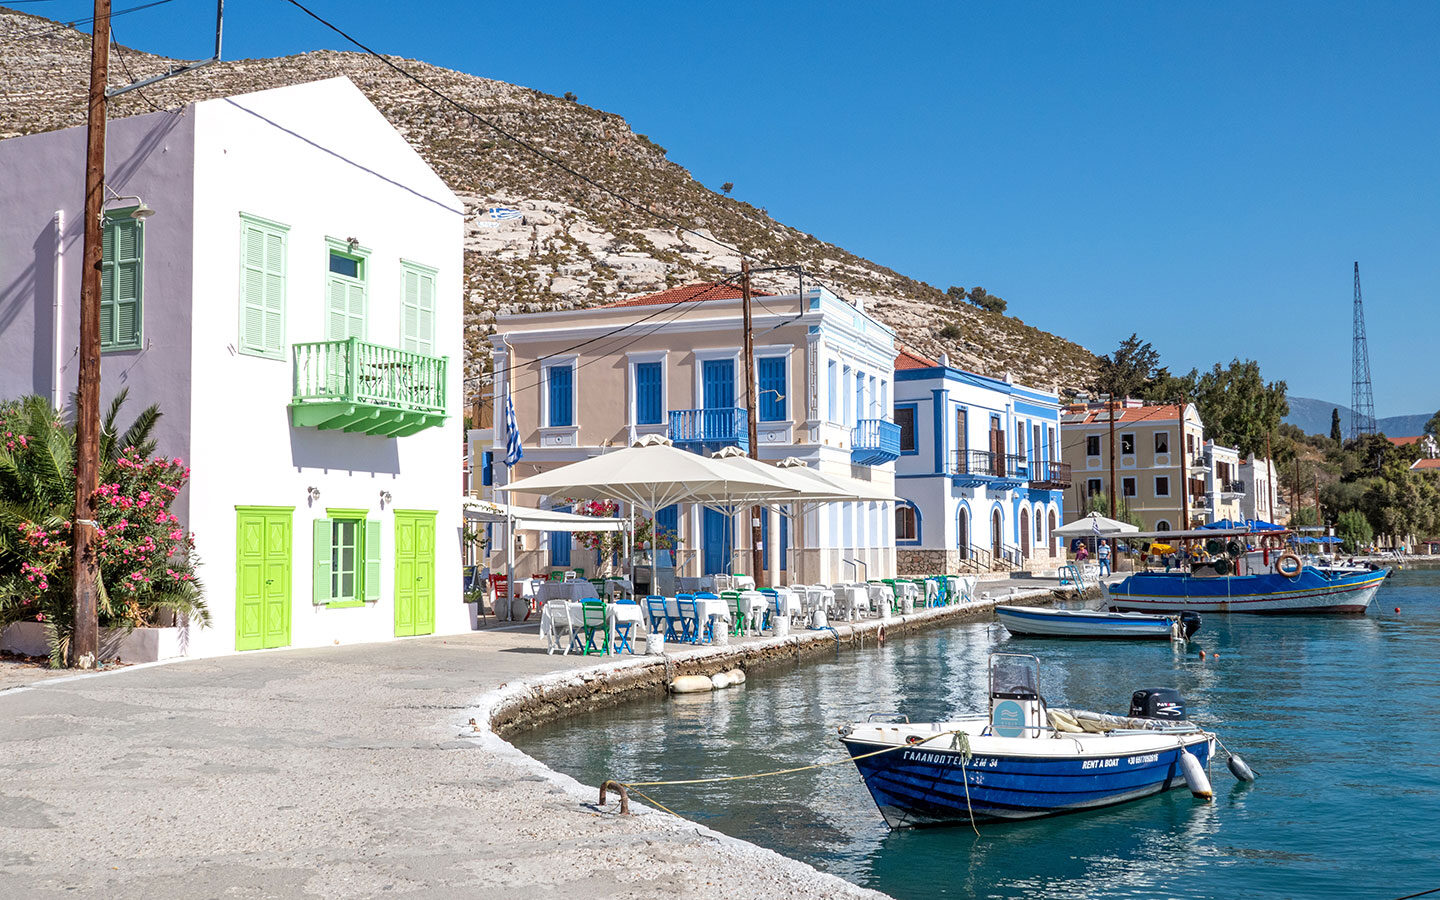 Colourful buildings on the Greek island of Kastellorizo